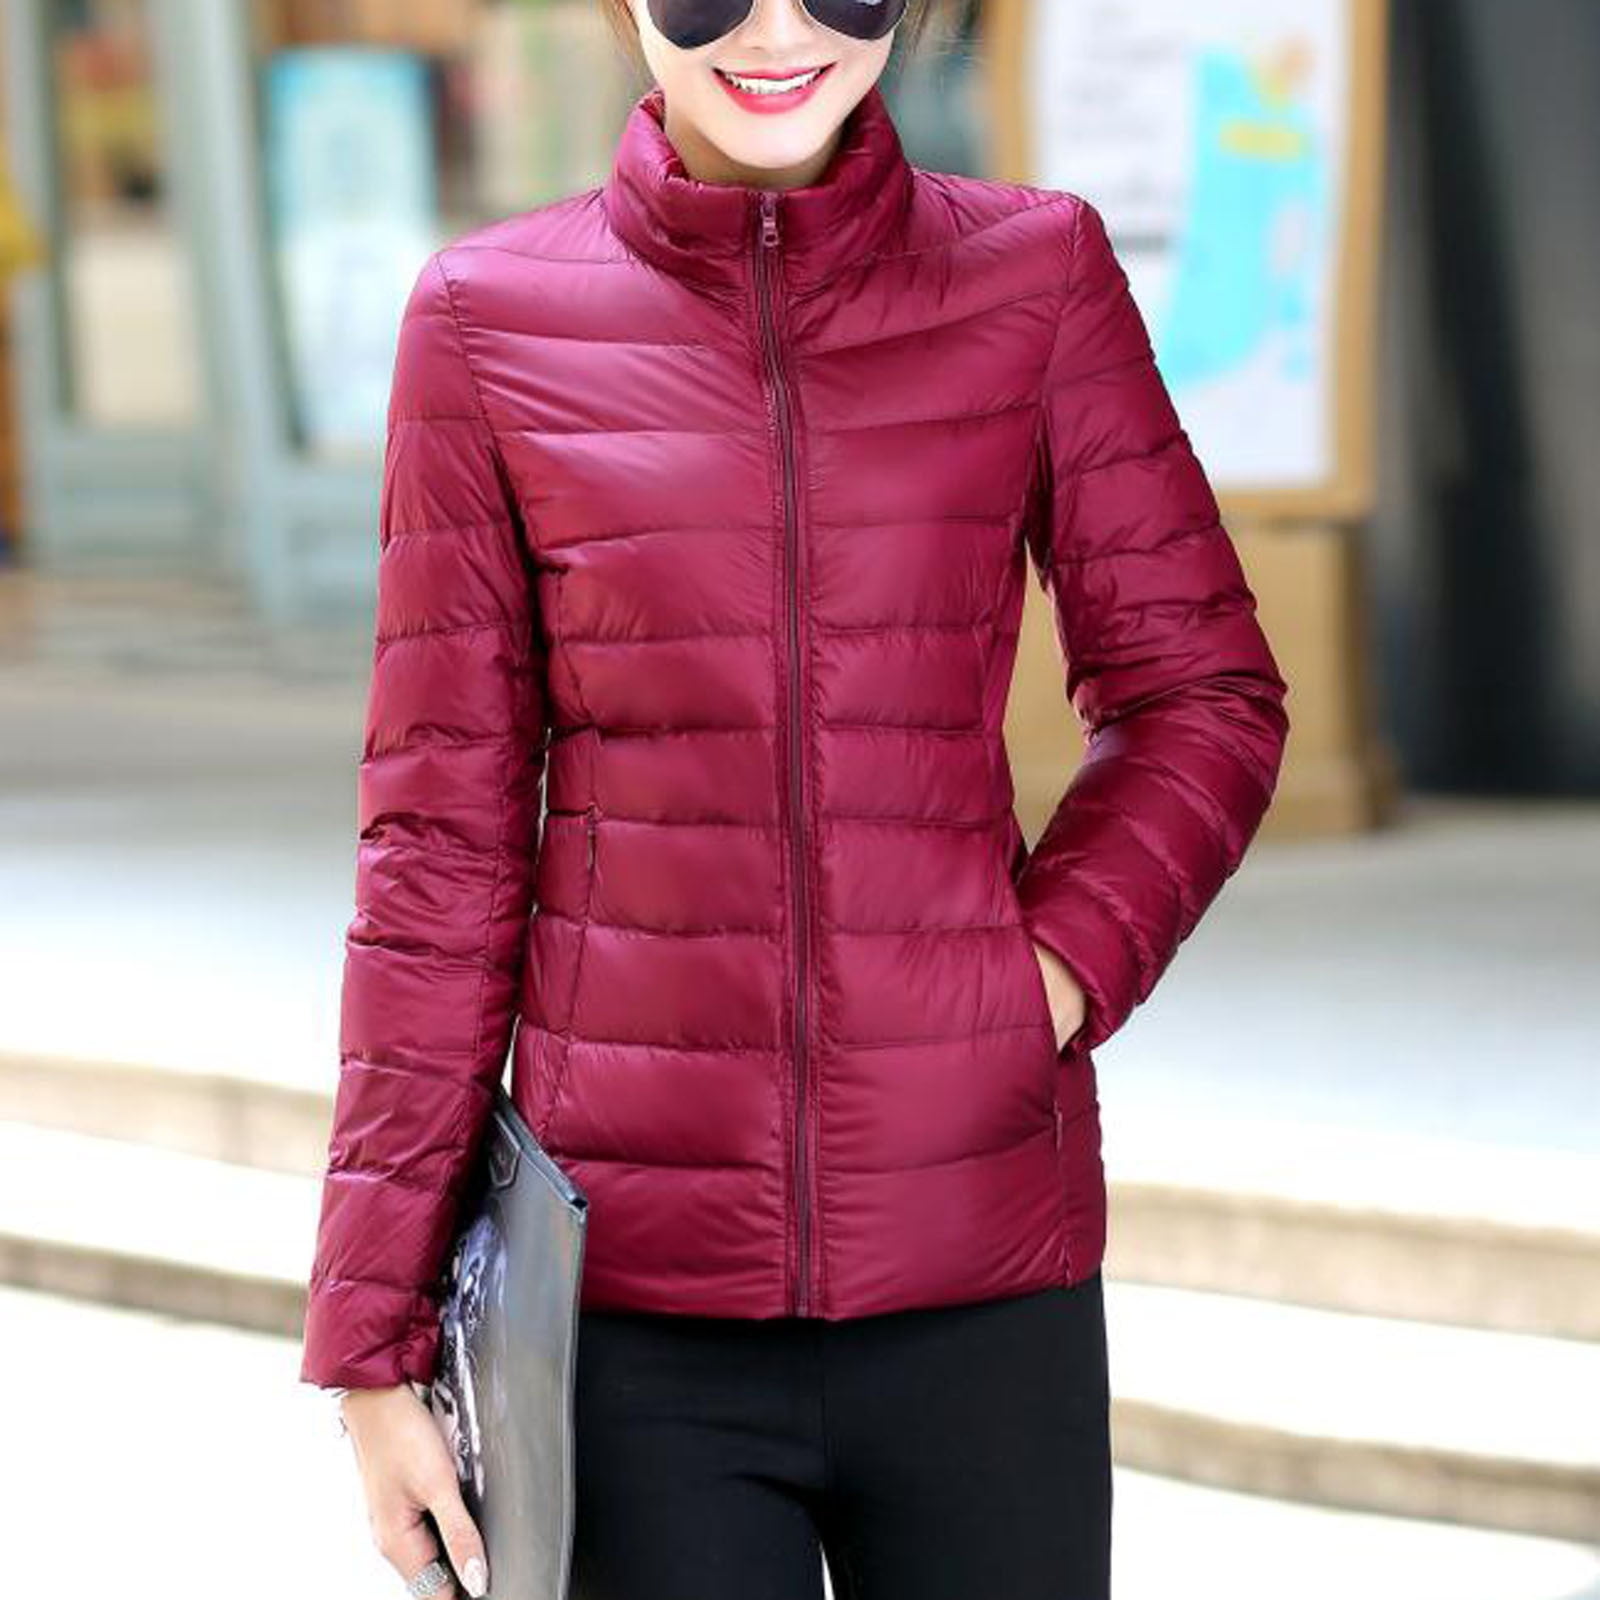 Fashion Women Fall Winter Coat Jacket Casual Warm Outwear Top Coat Jackets Tops 